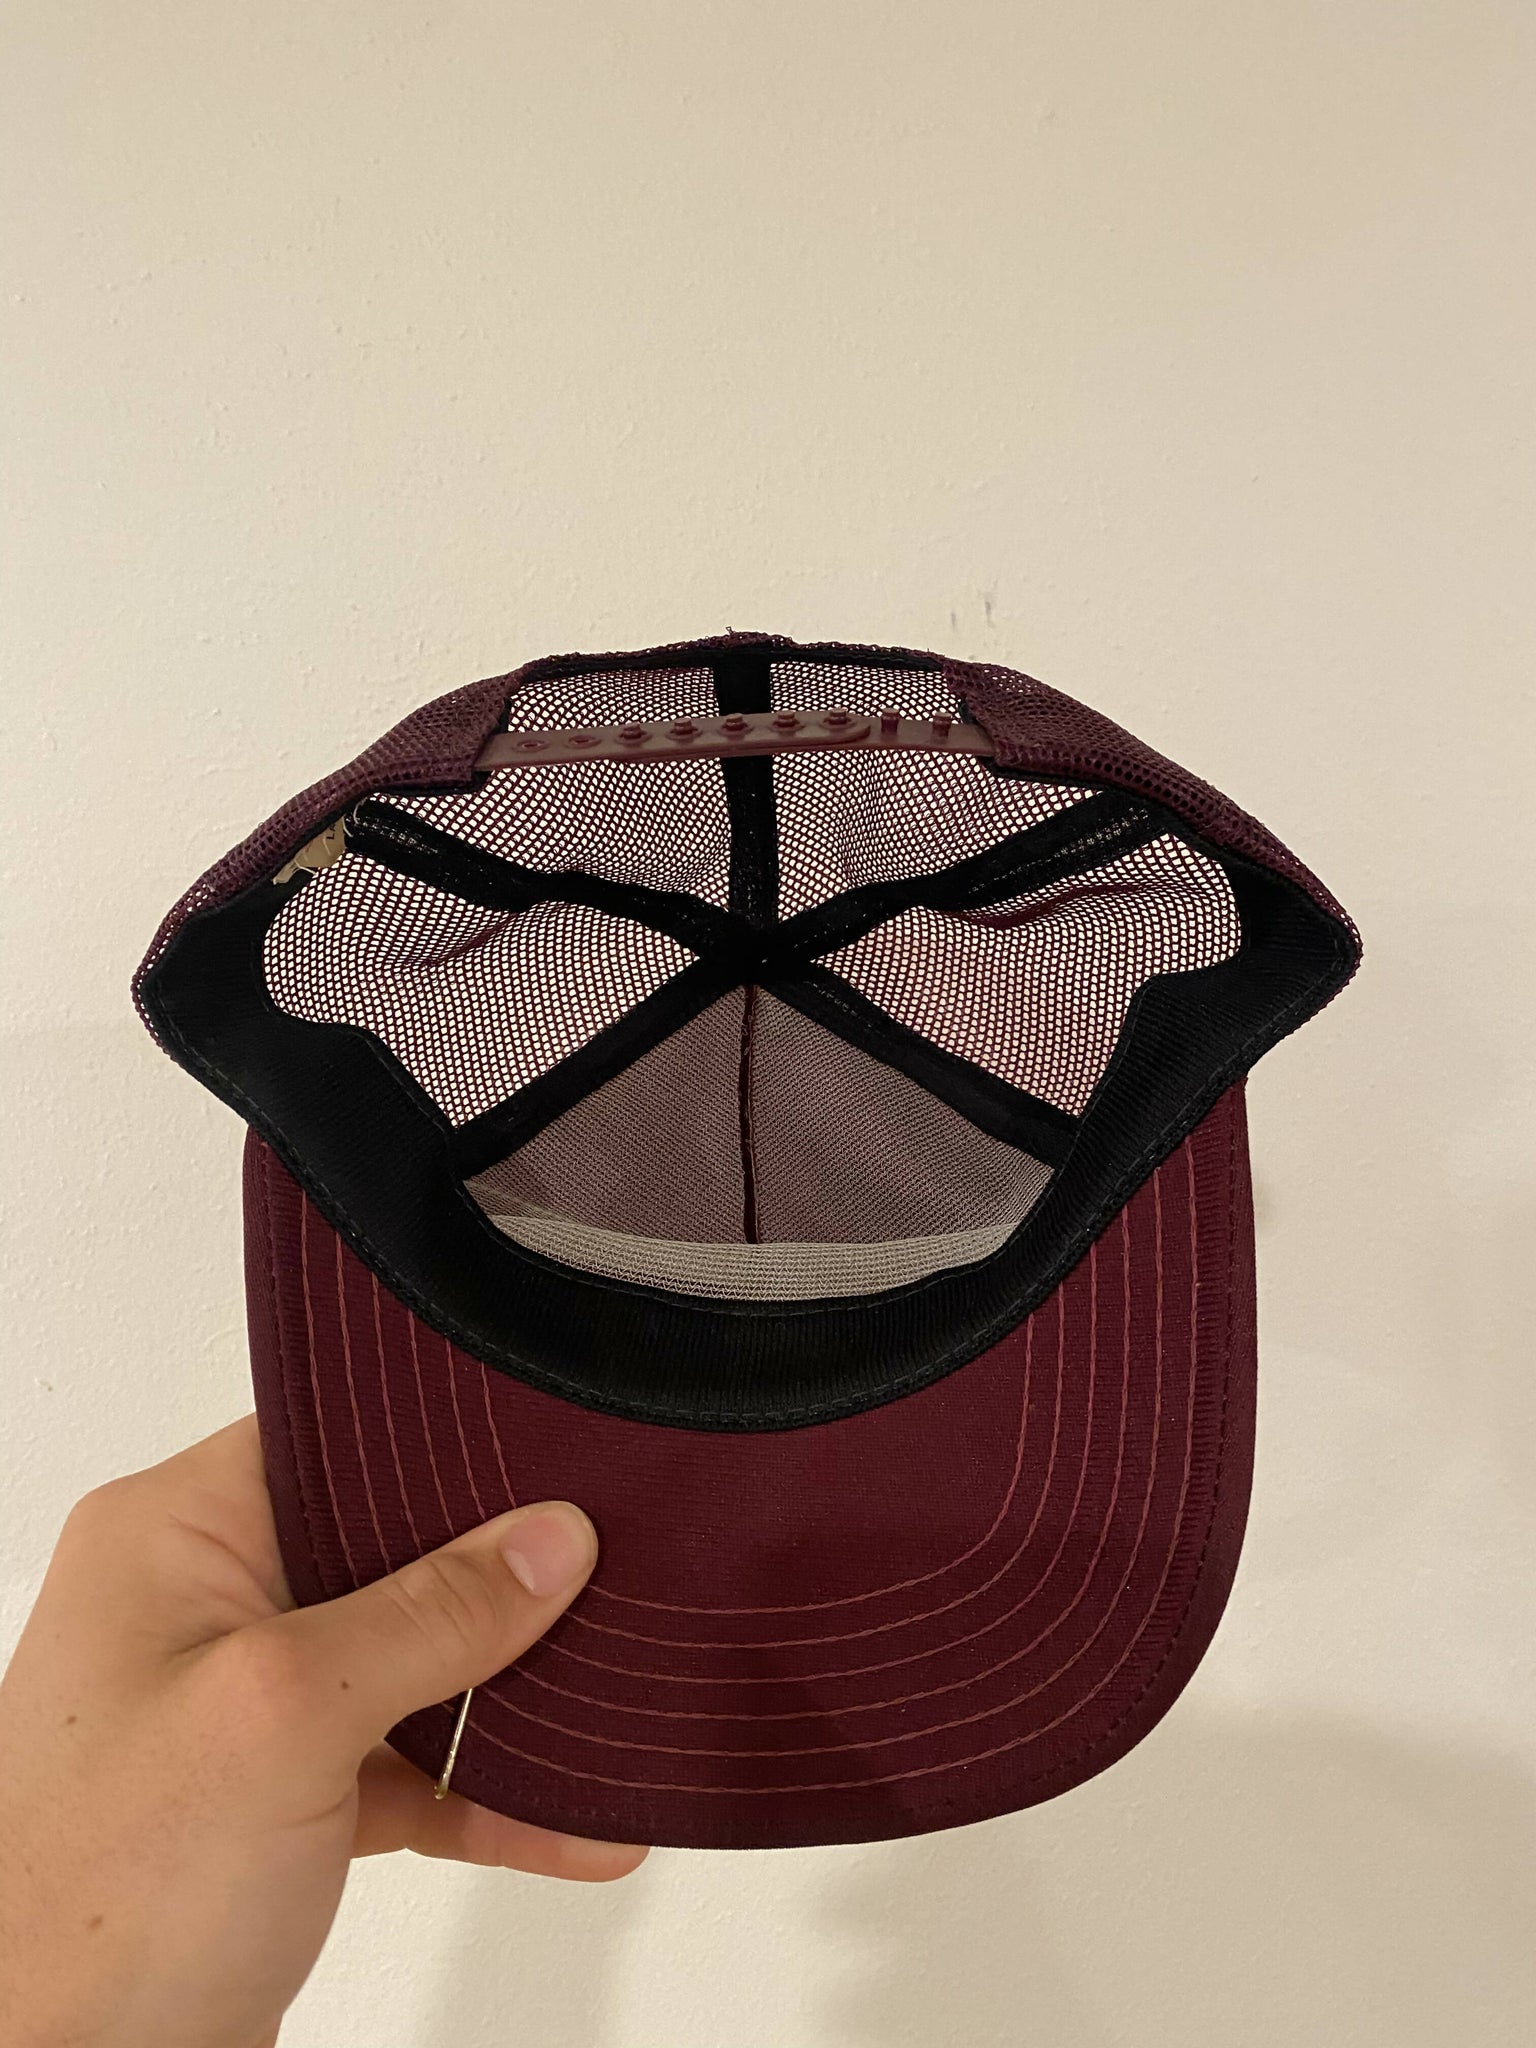 G Loomis AFLEX Technical Hats